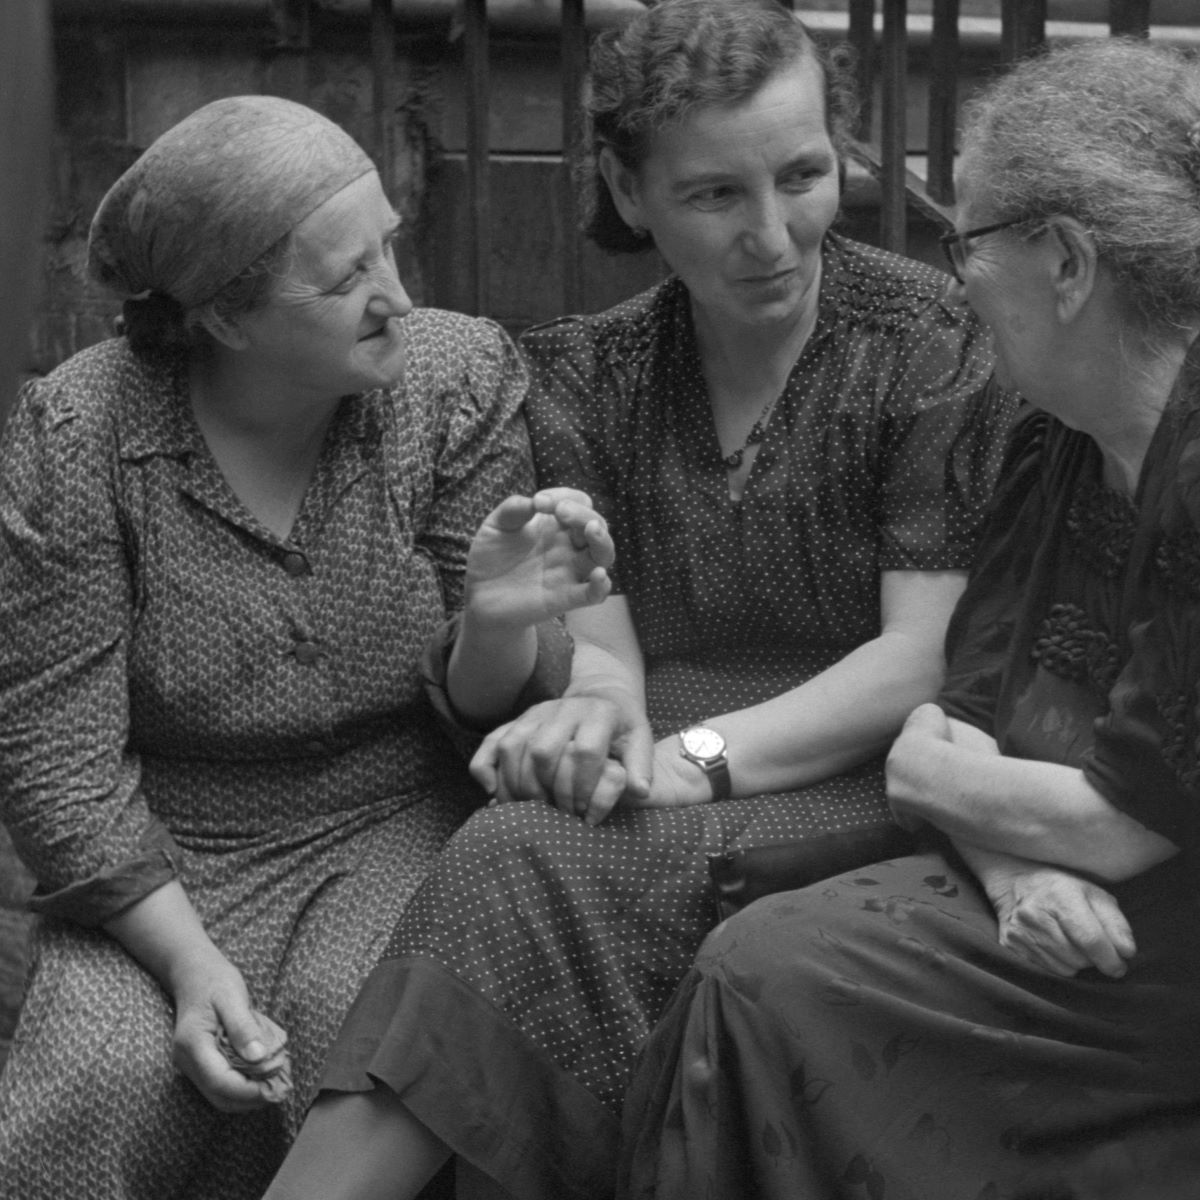 Untitled (3 Women), New York, c. 1946 - 1950